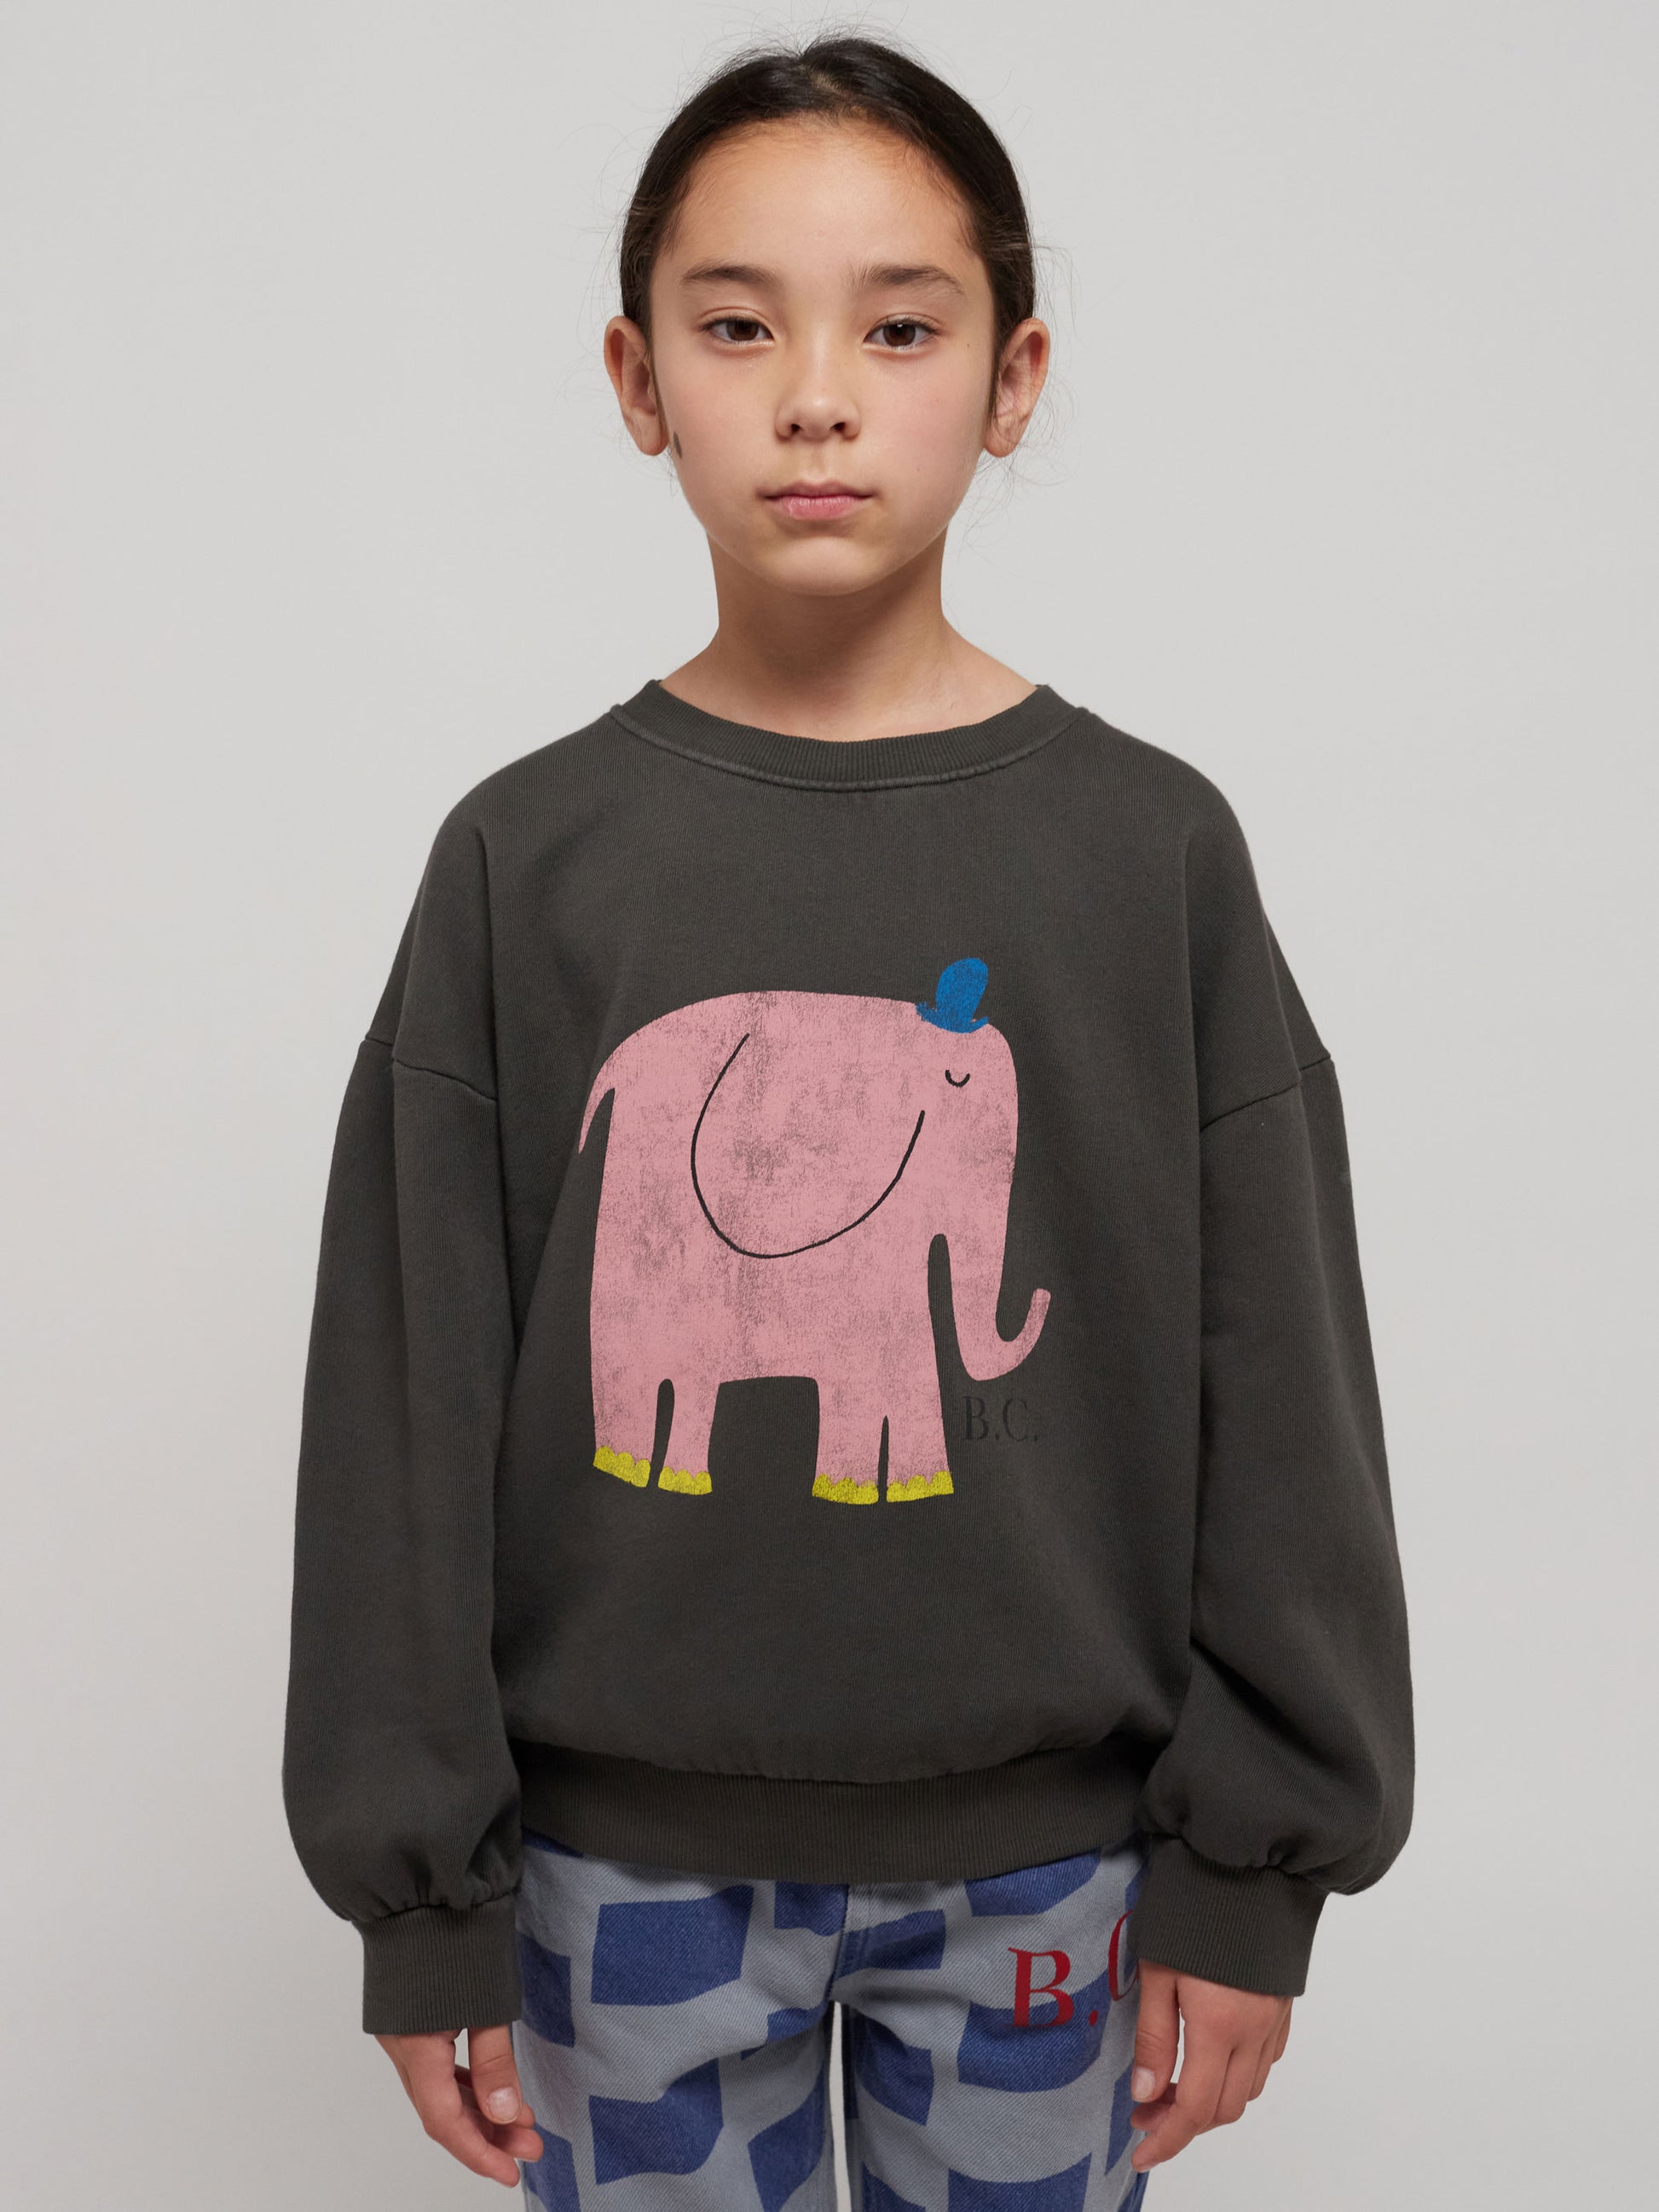 The Elephant sweatshirt Choses – Bobo